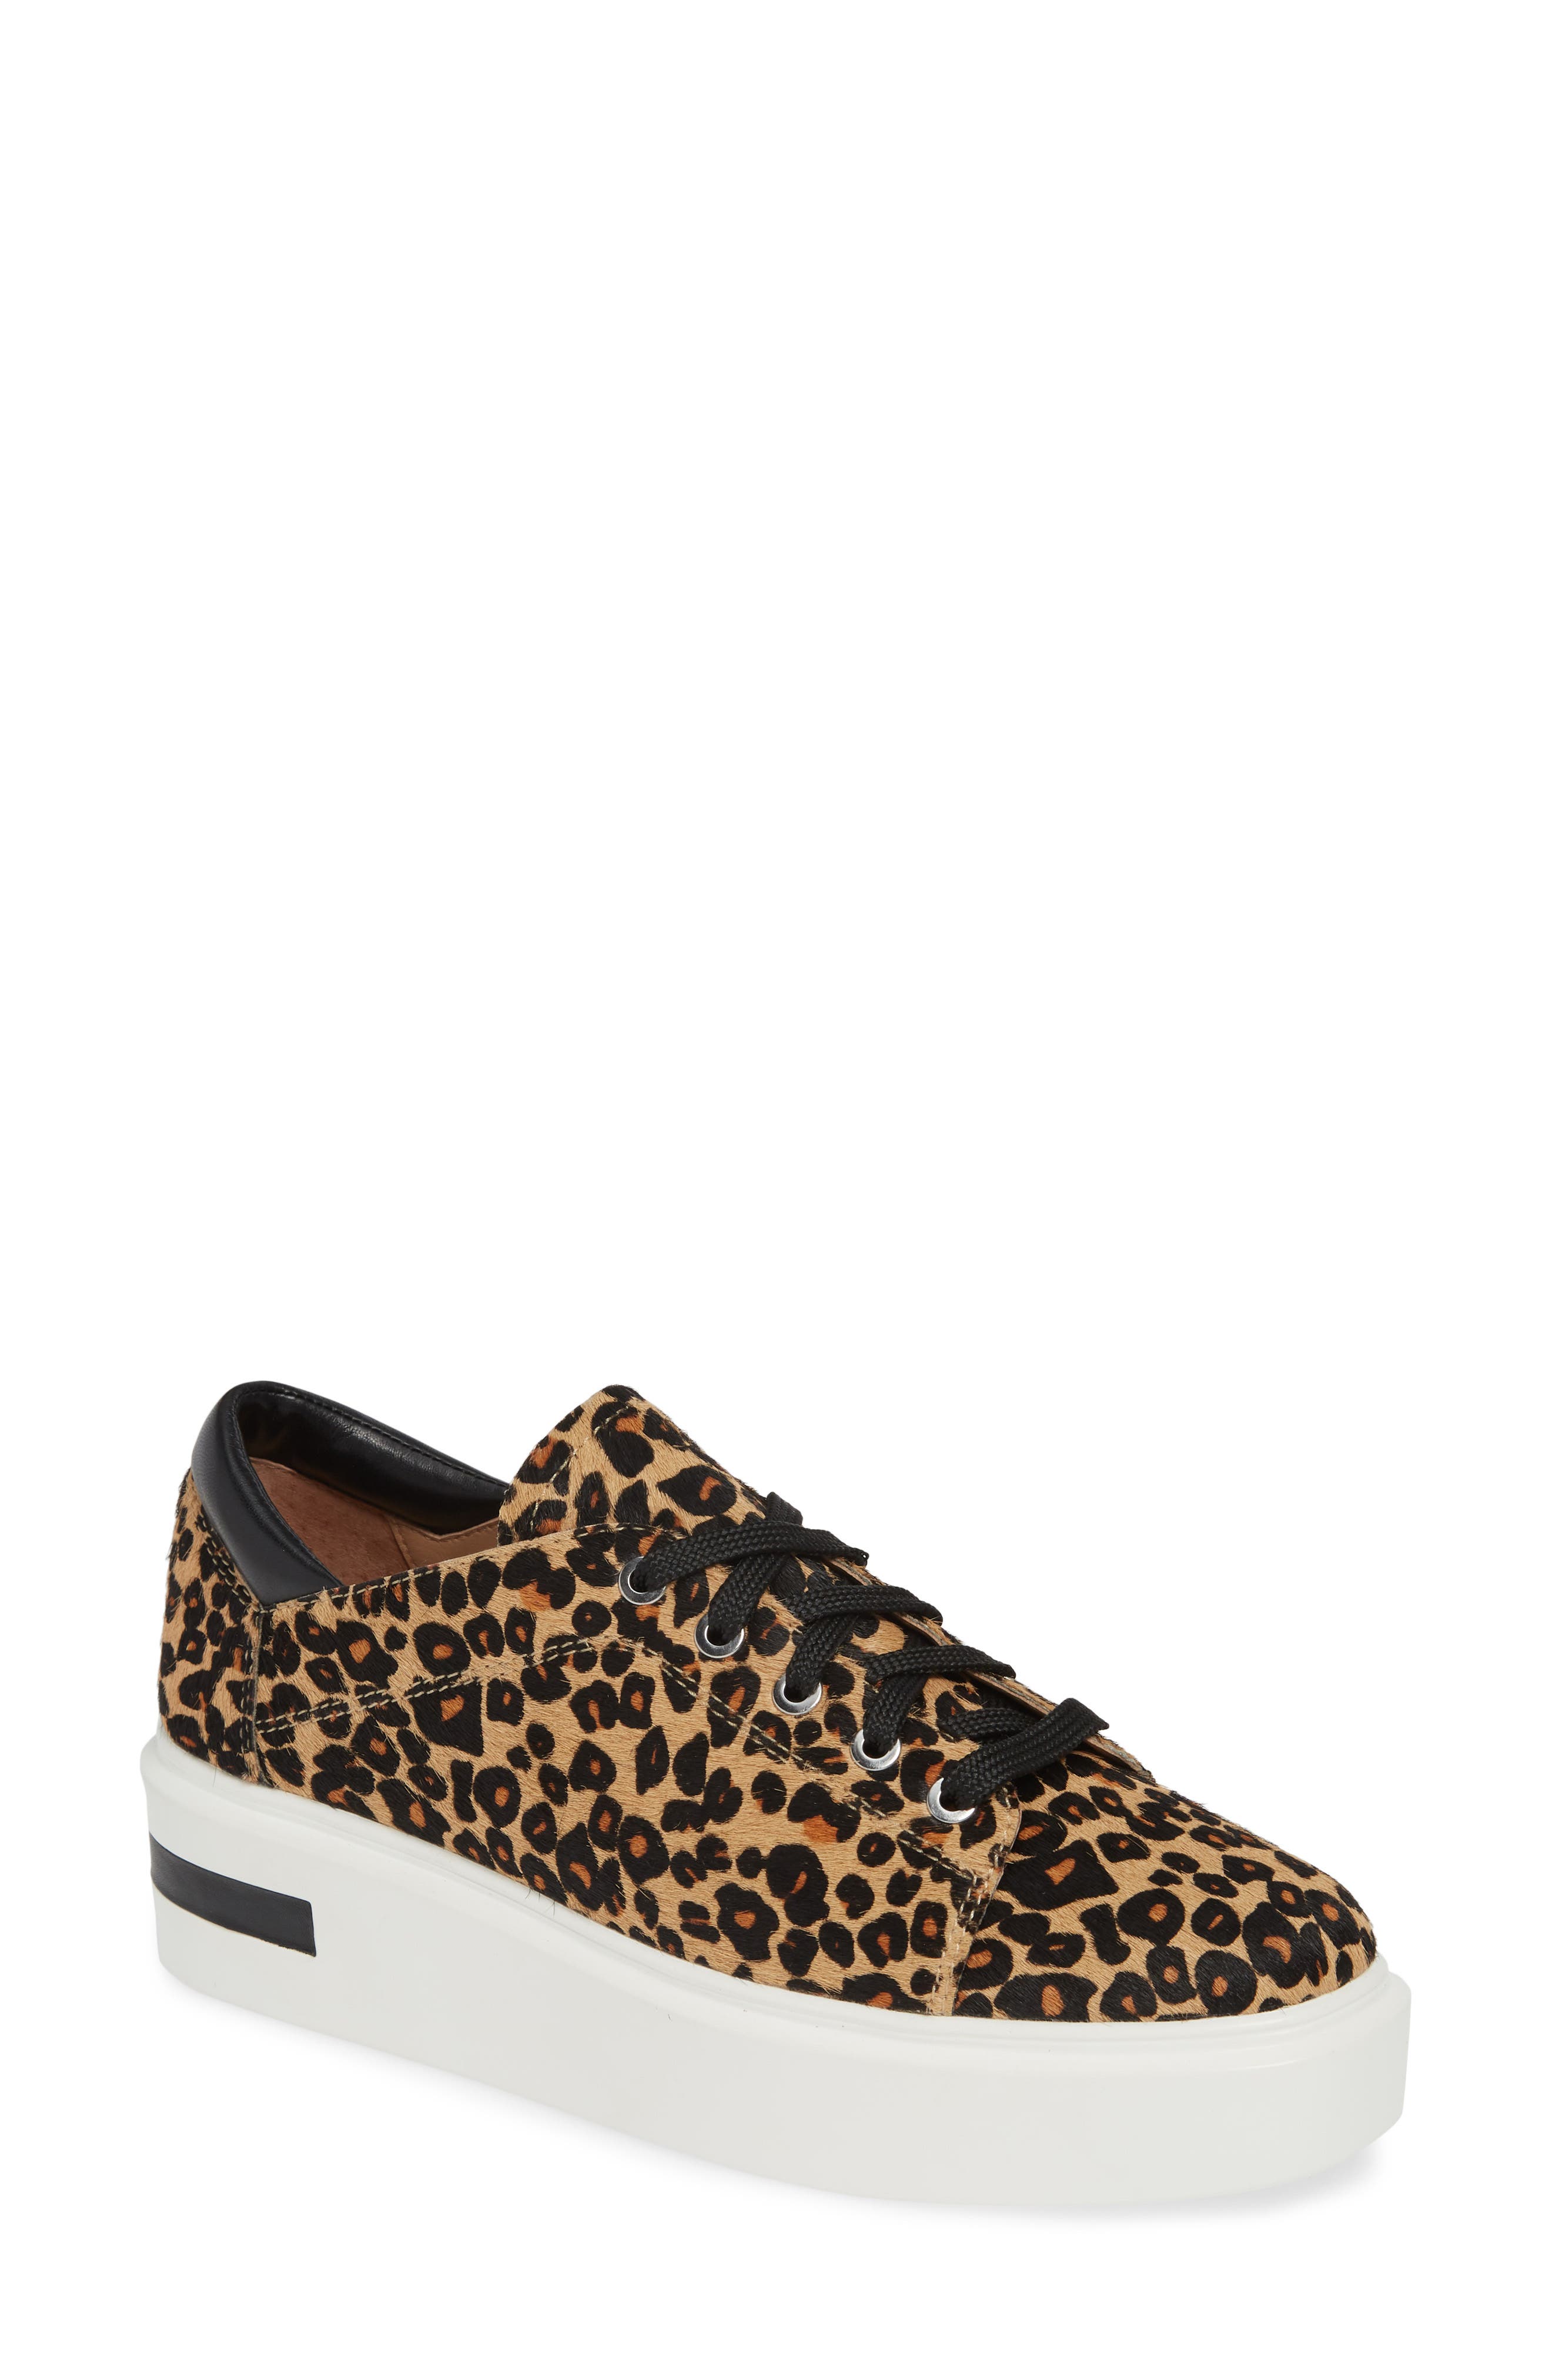 platform sneakers leopard